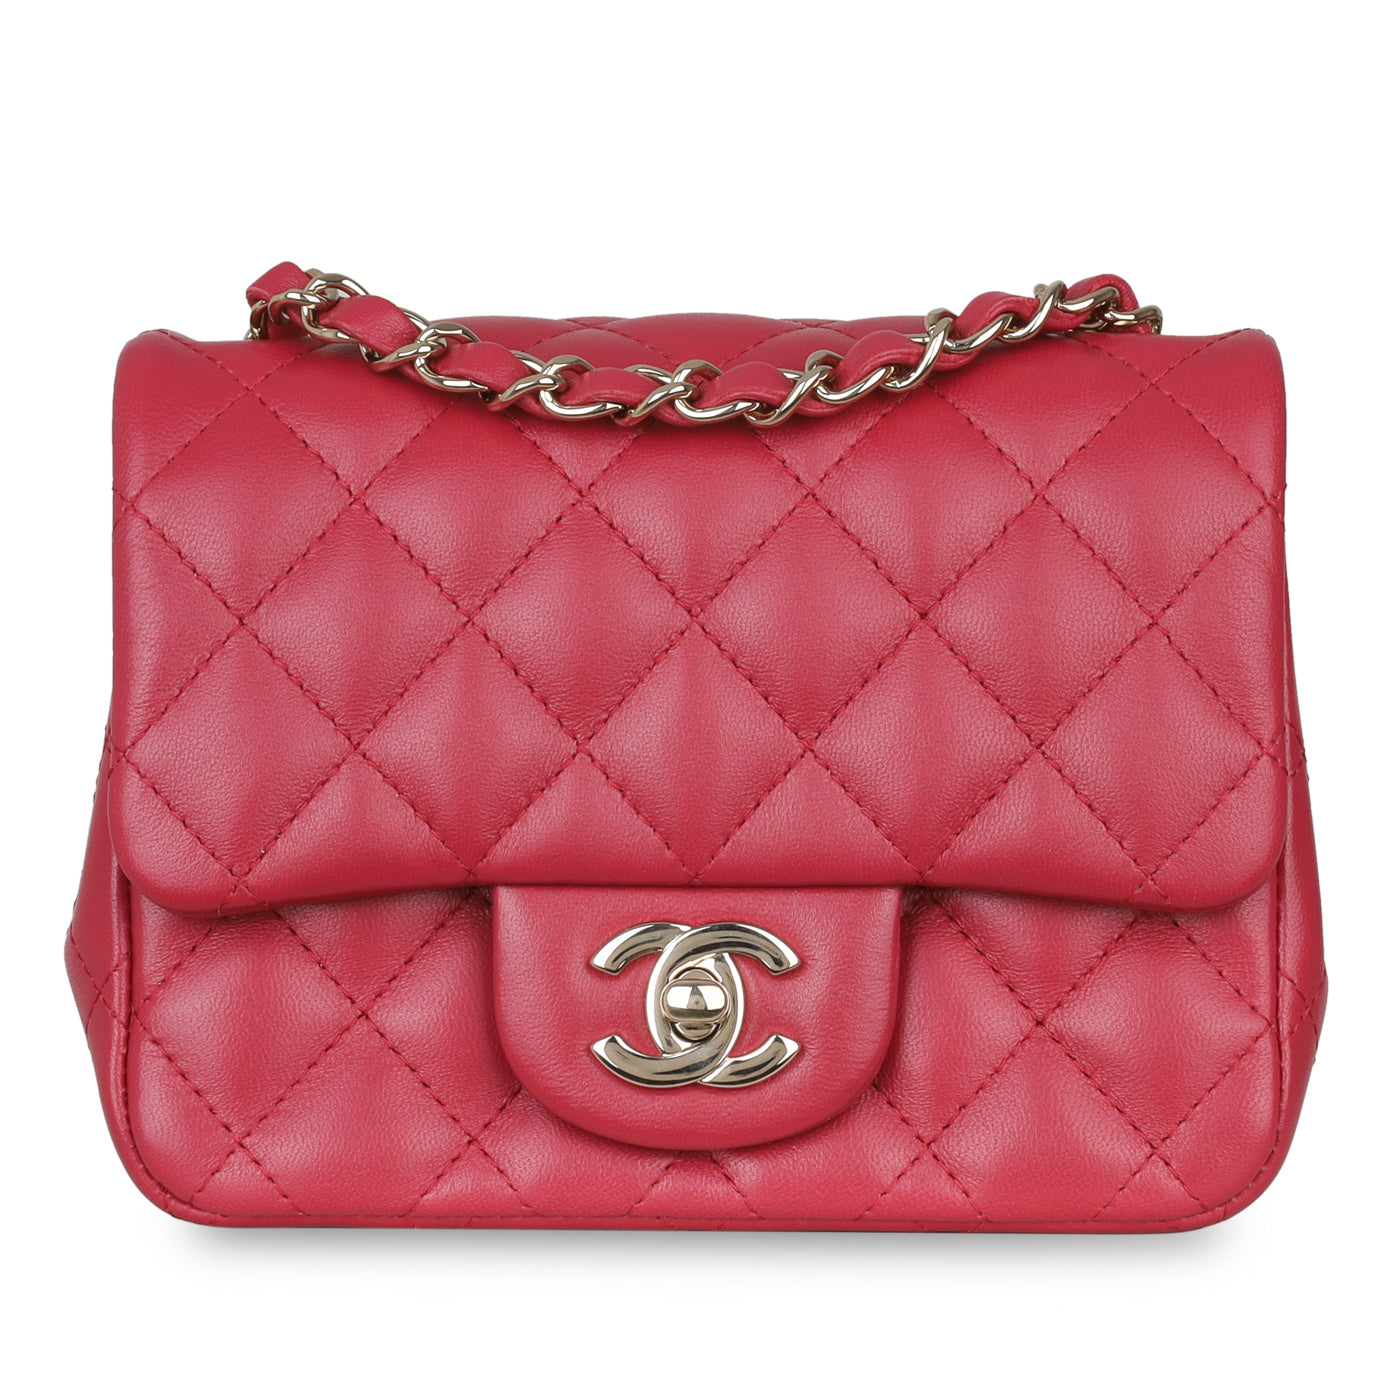 Chanel - Mini Square Classic Flap Bag - Raspberry Pink Caviar